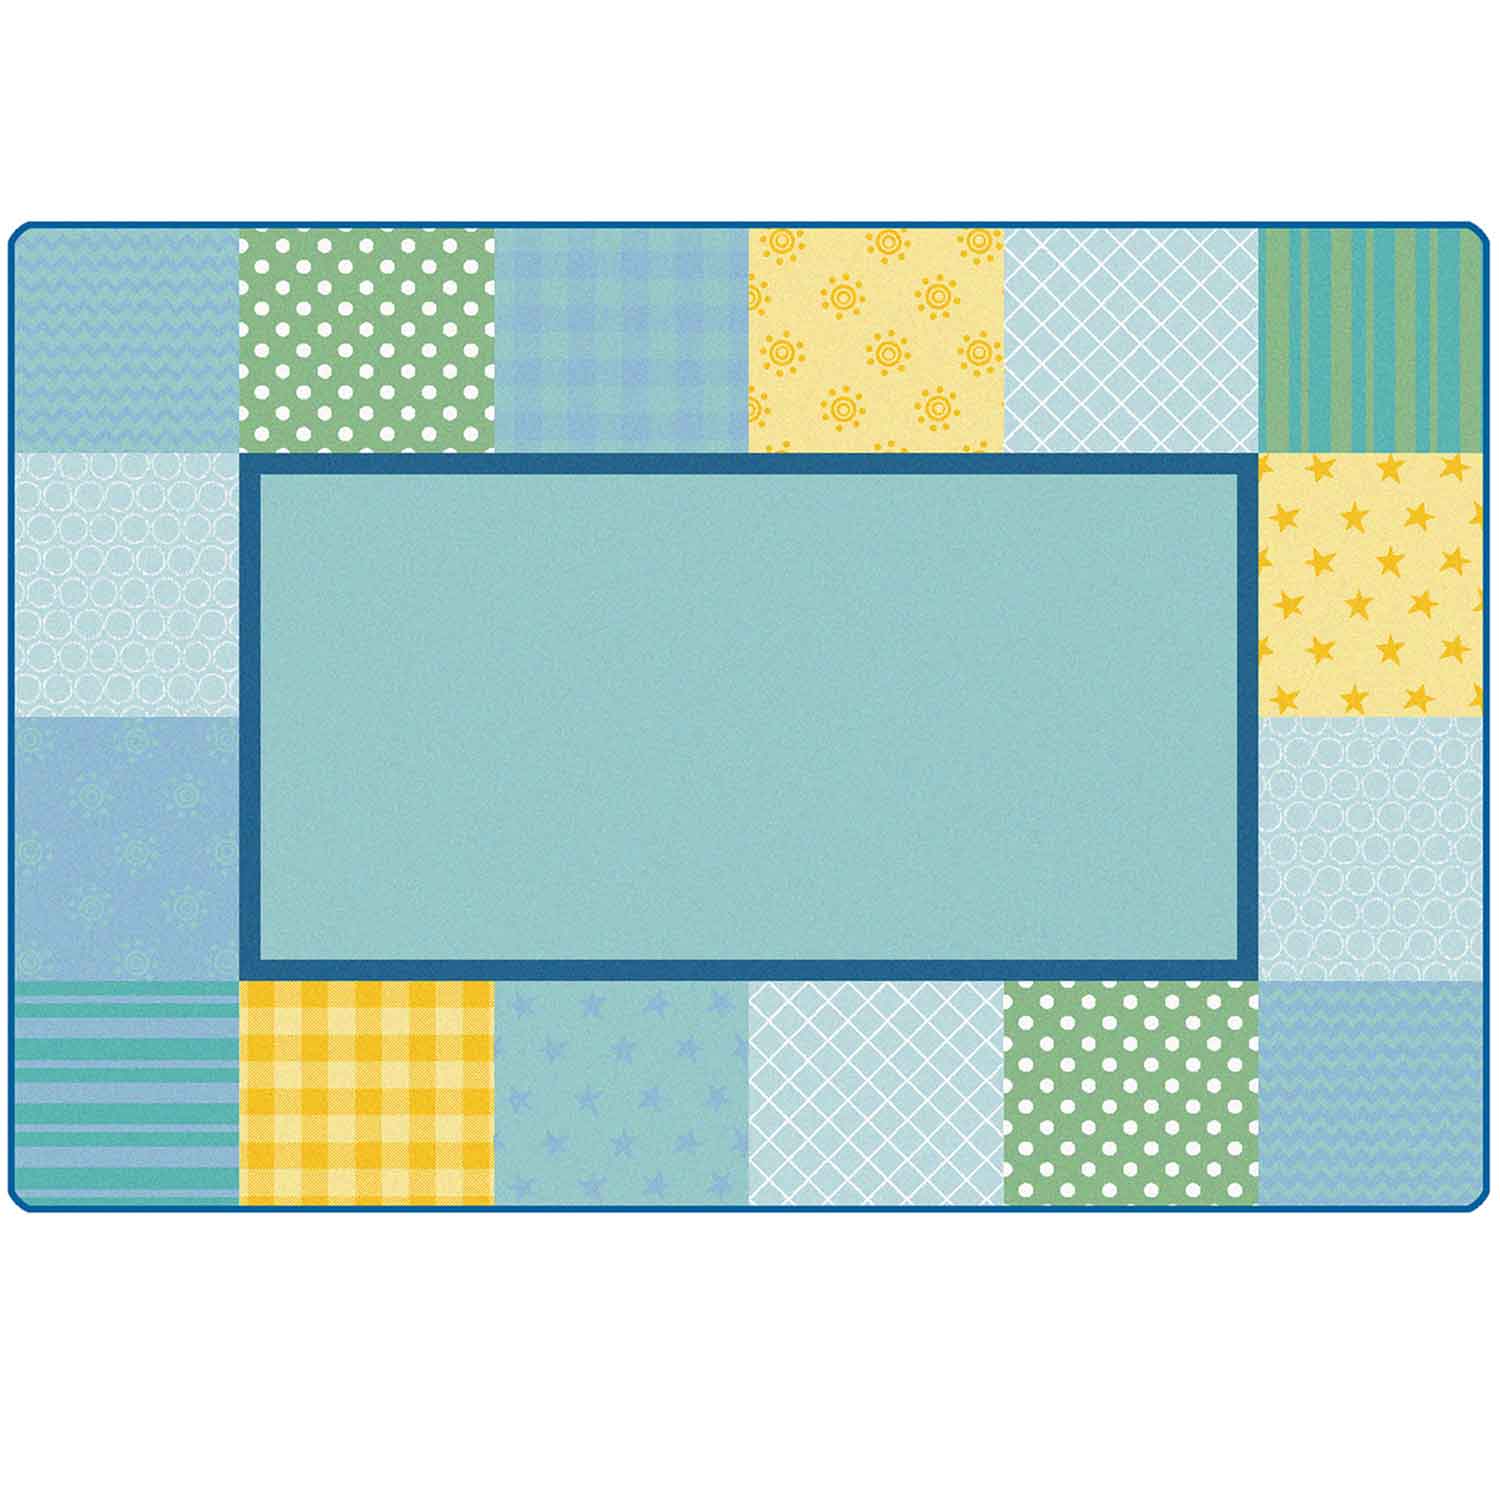 KIDSoft™ Pattern Blocks Rug, Soft Colors, Rectangle 6' x 9'